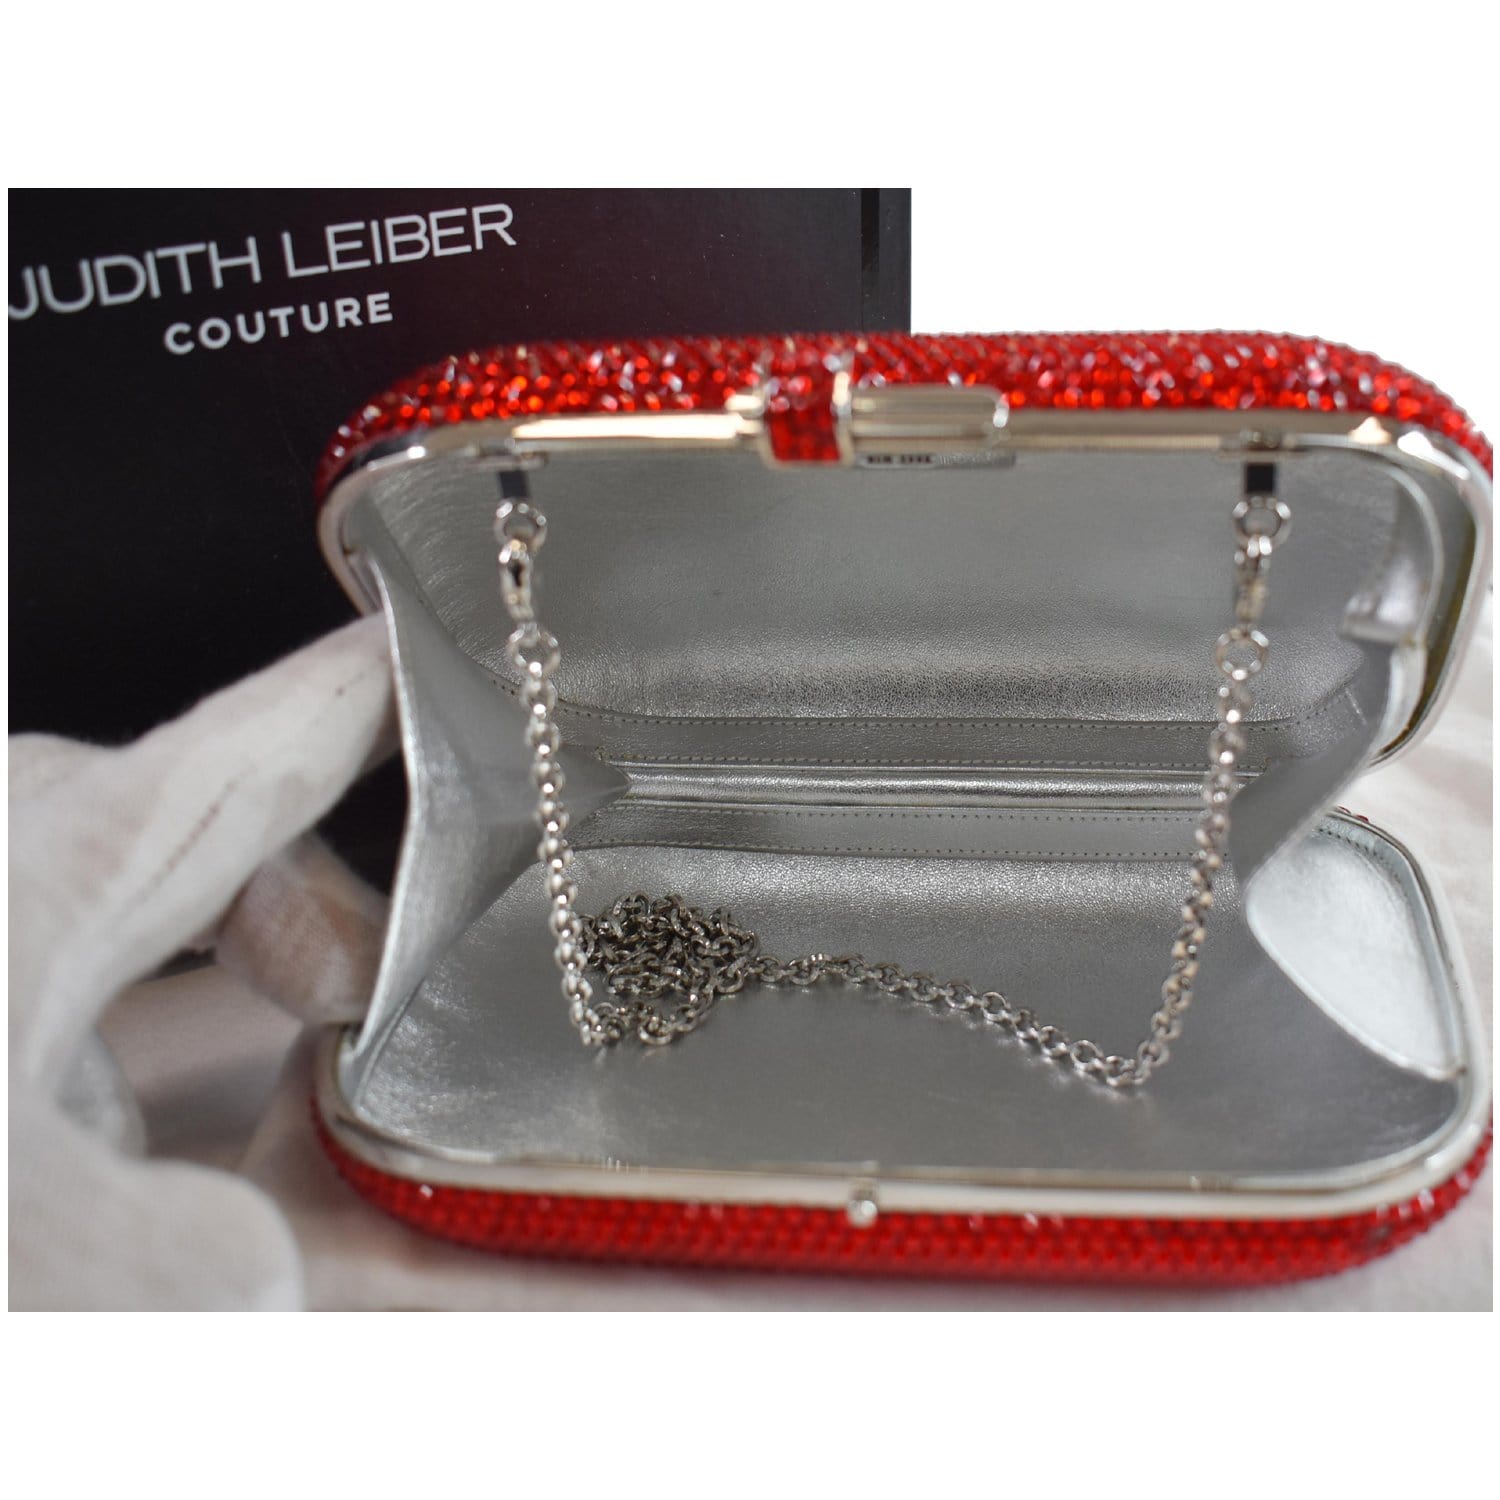 Judith Leiber Slide Lock Crystal Chain Clutch Bag Red